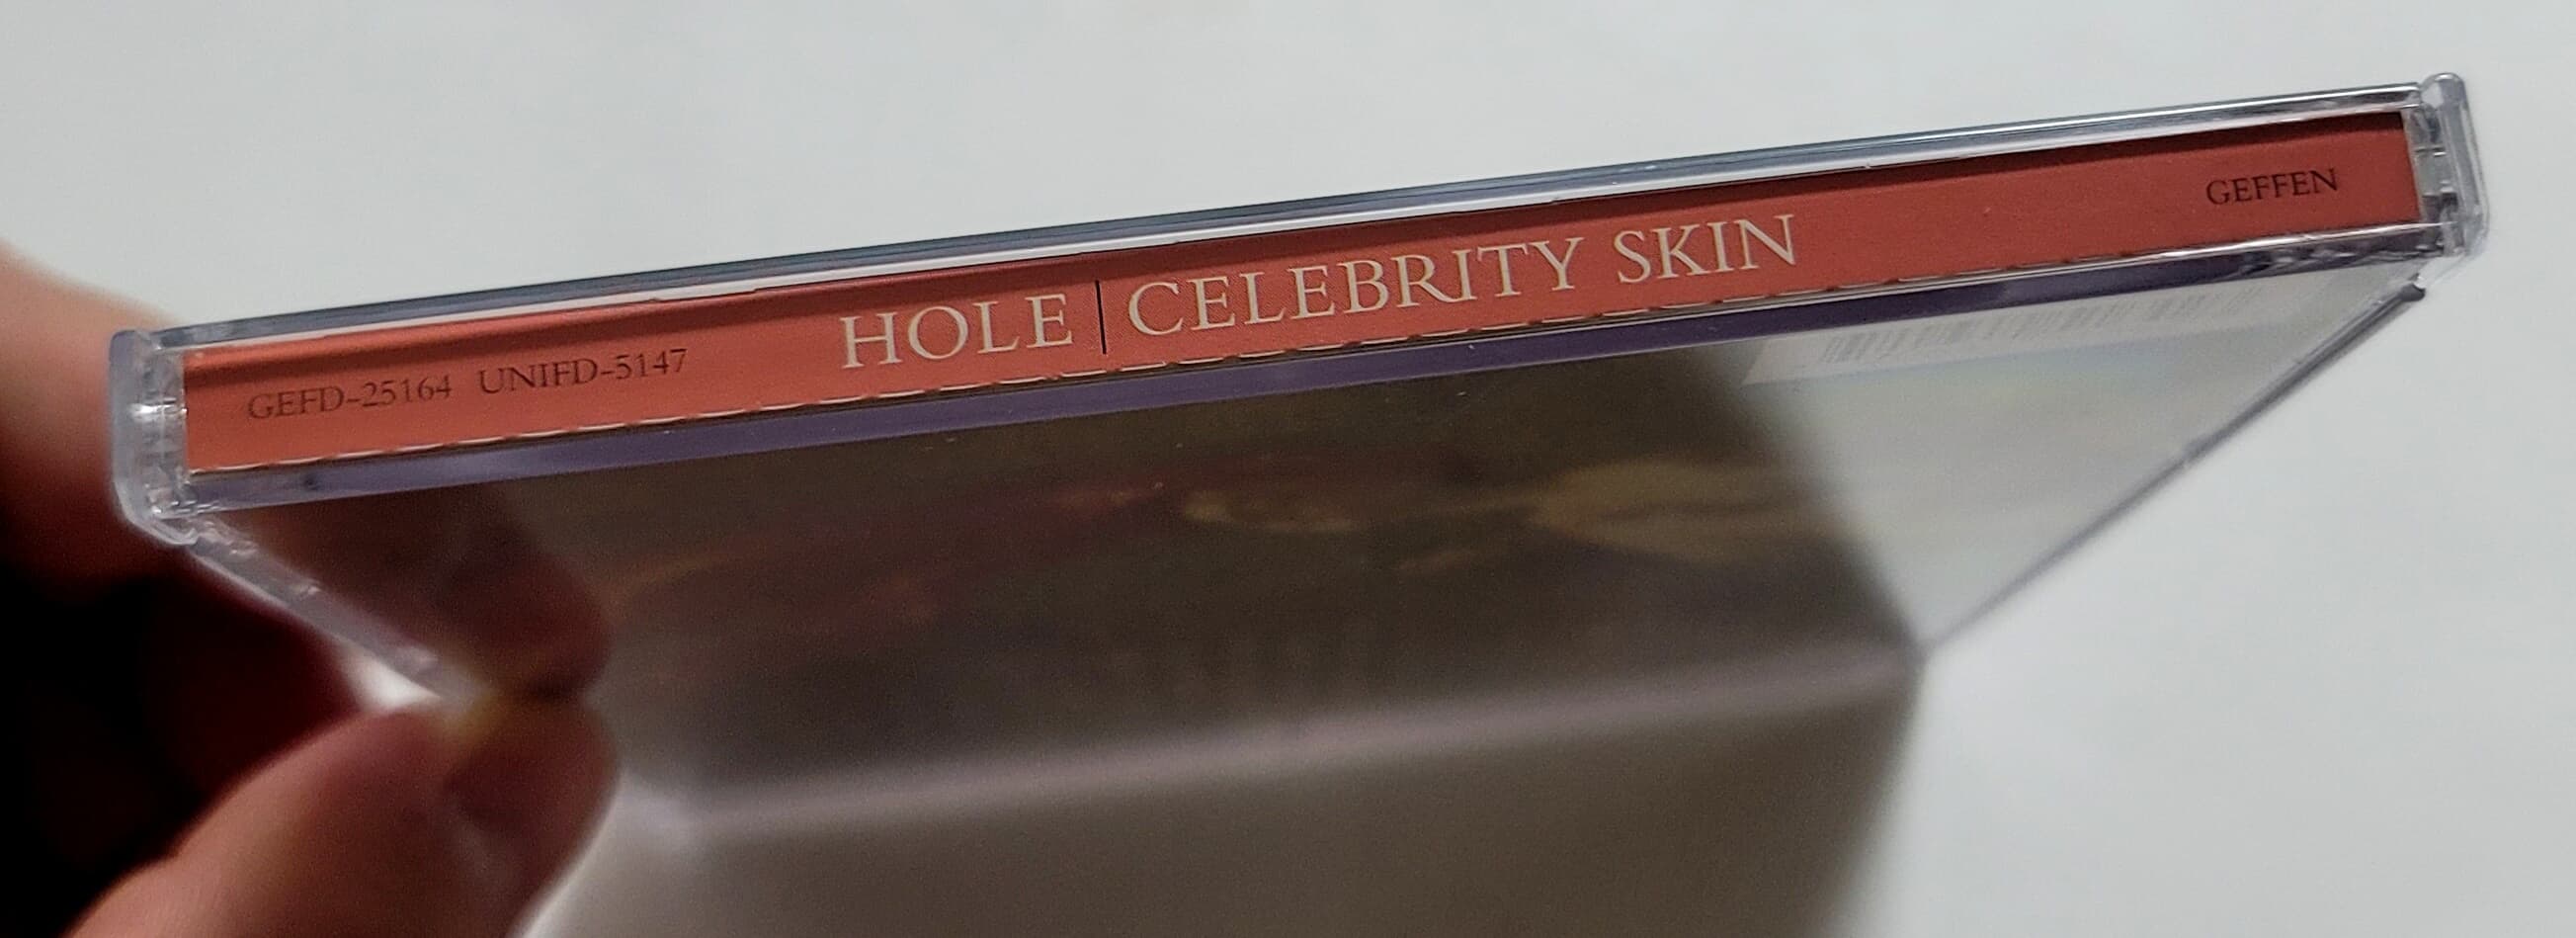 Hole (홀) - Celebrity Skin